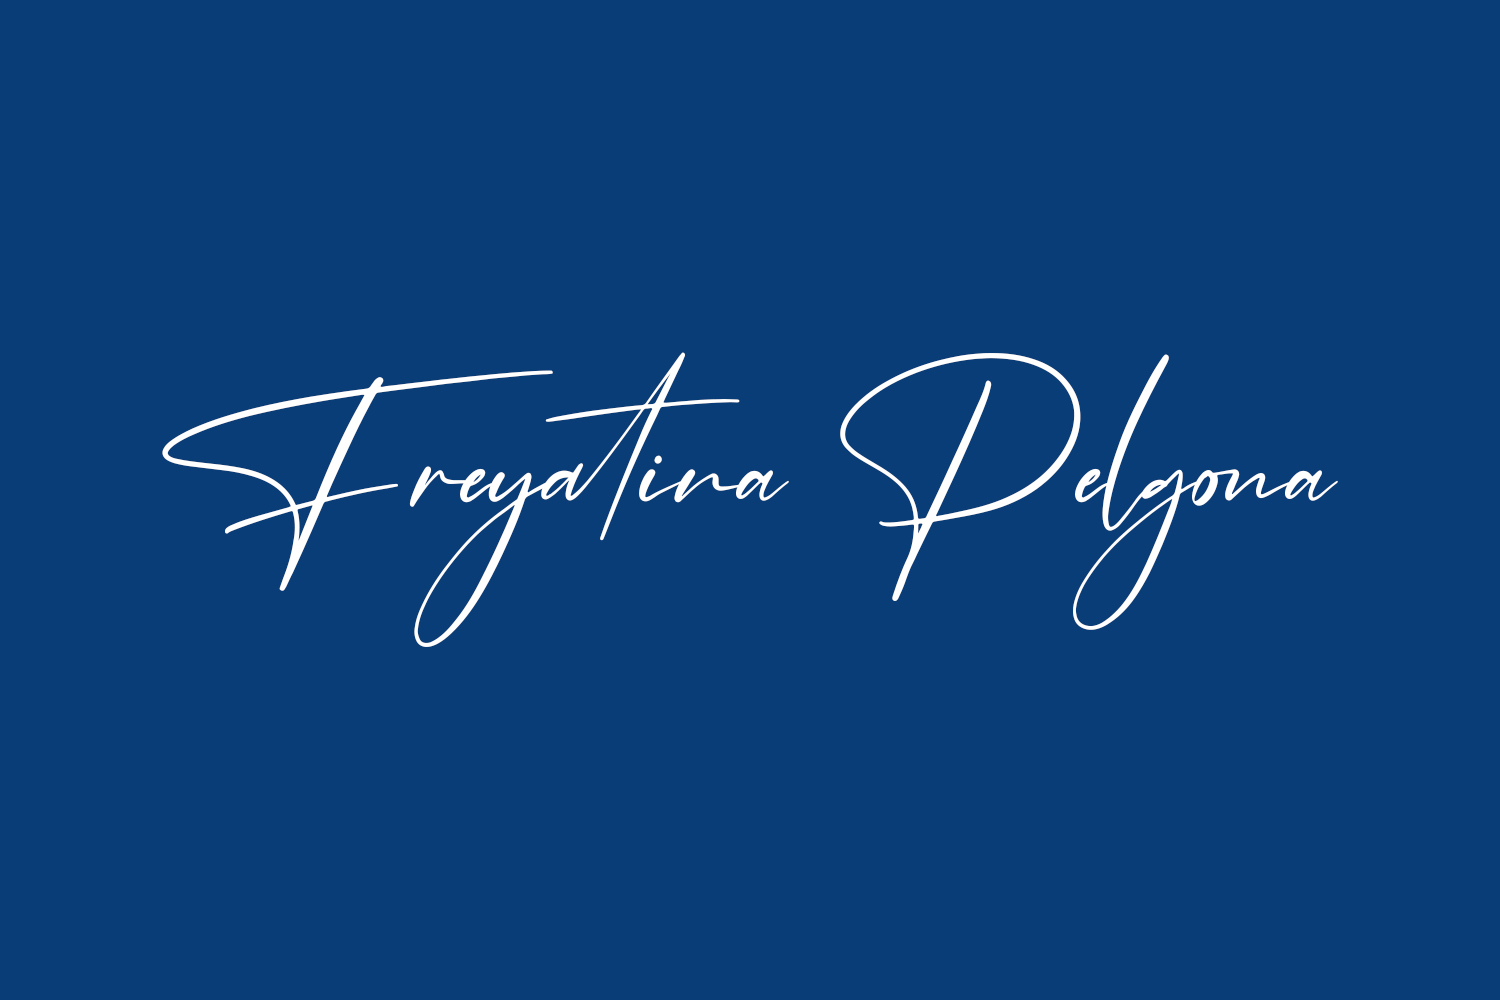 Freyatina Pelgona Free Font